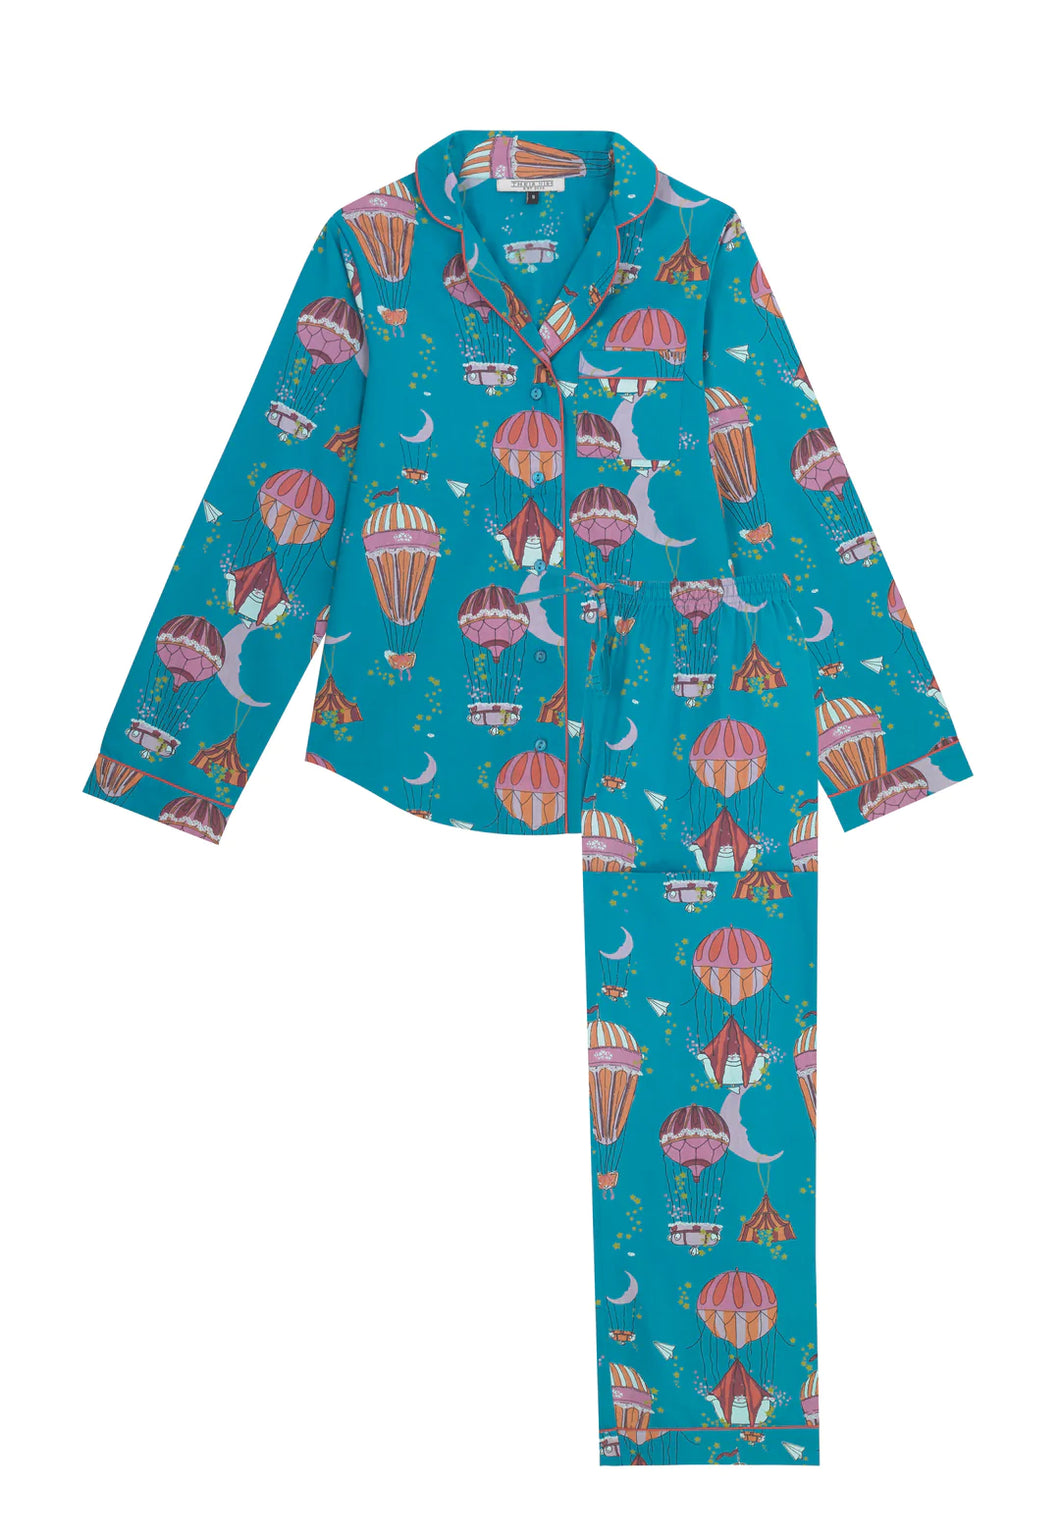 Womens Traditional Cotton Pyjama Set, Teal Balloons Print